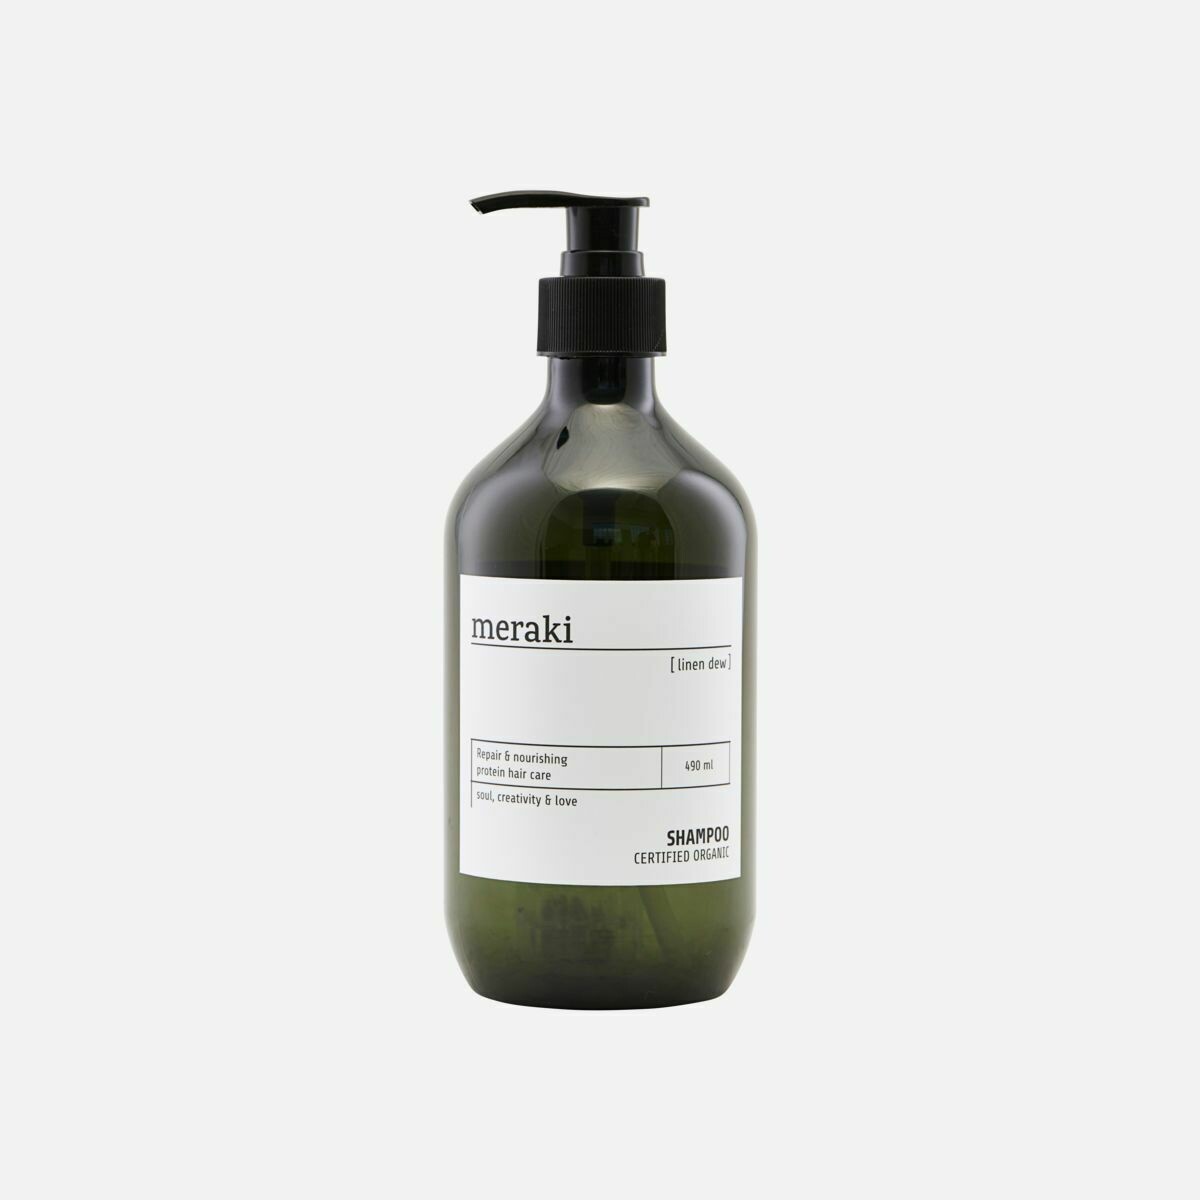 Shampoo, Linen dew, 490ml